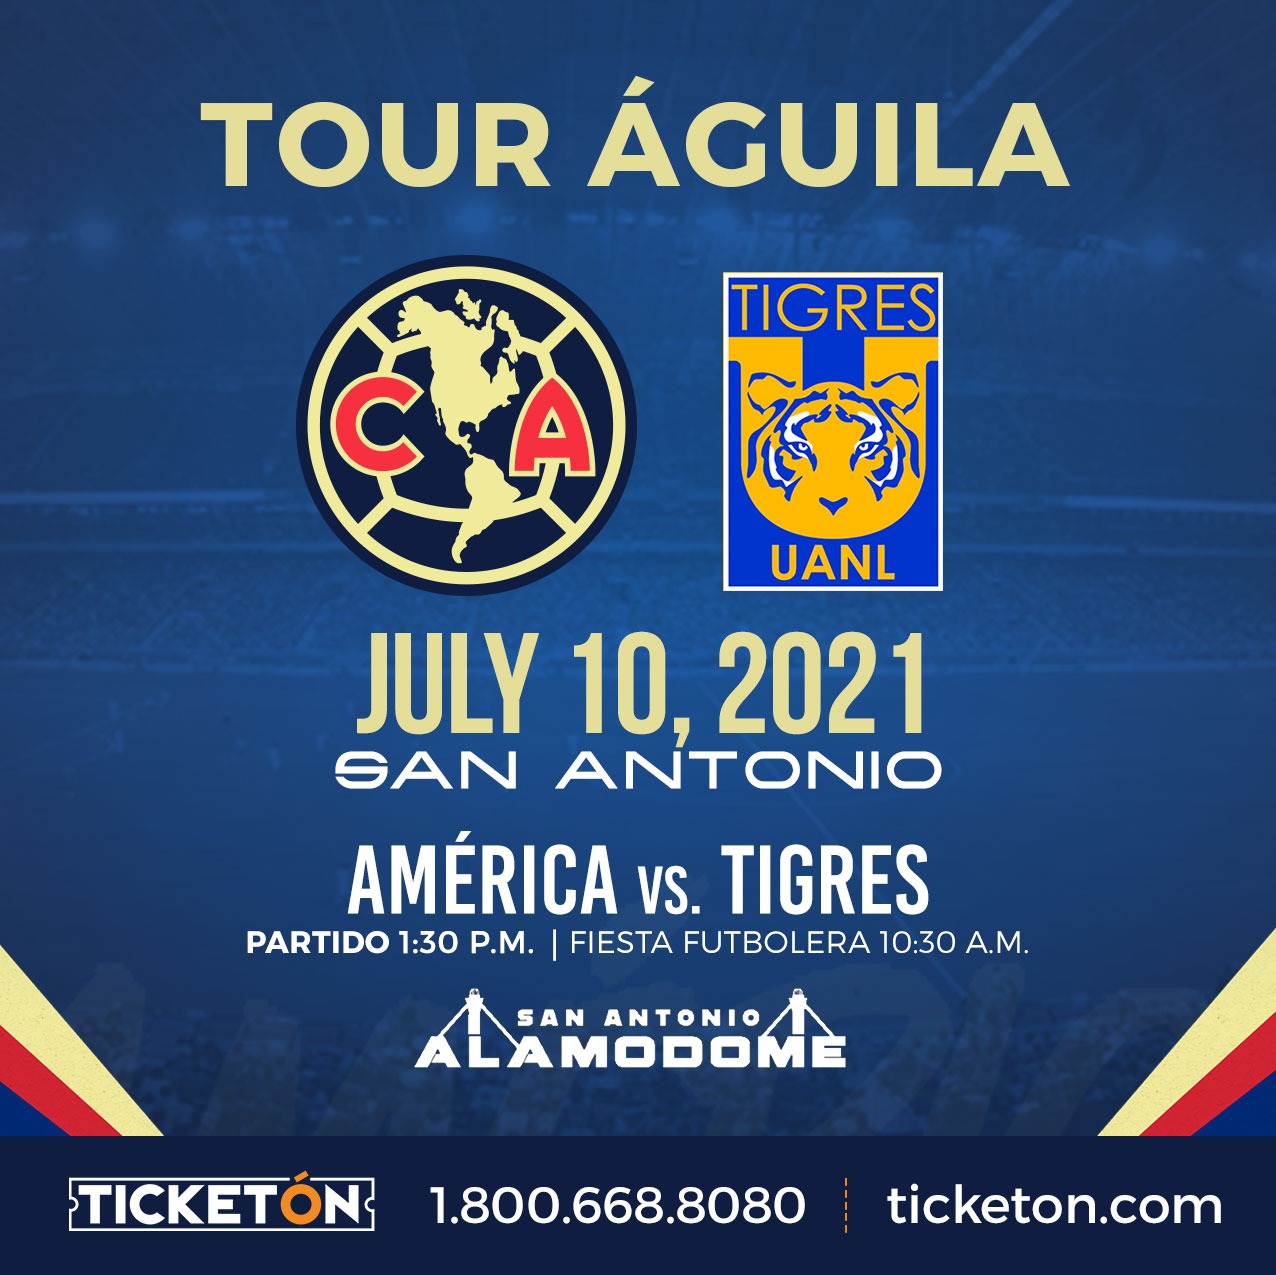 Club America vs Tigres Alamodome Tickets Boletos San Antonio TX 07